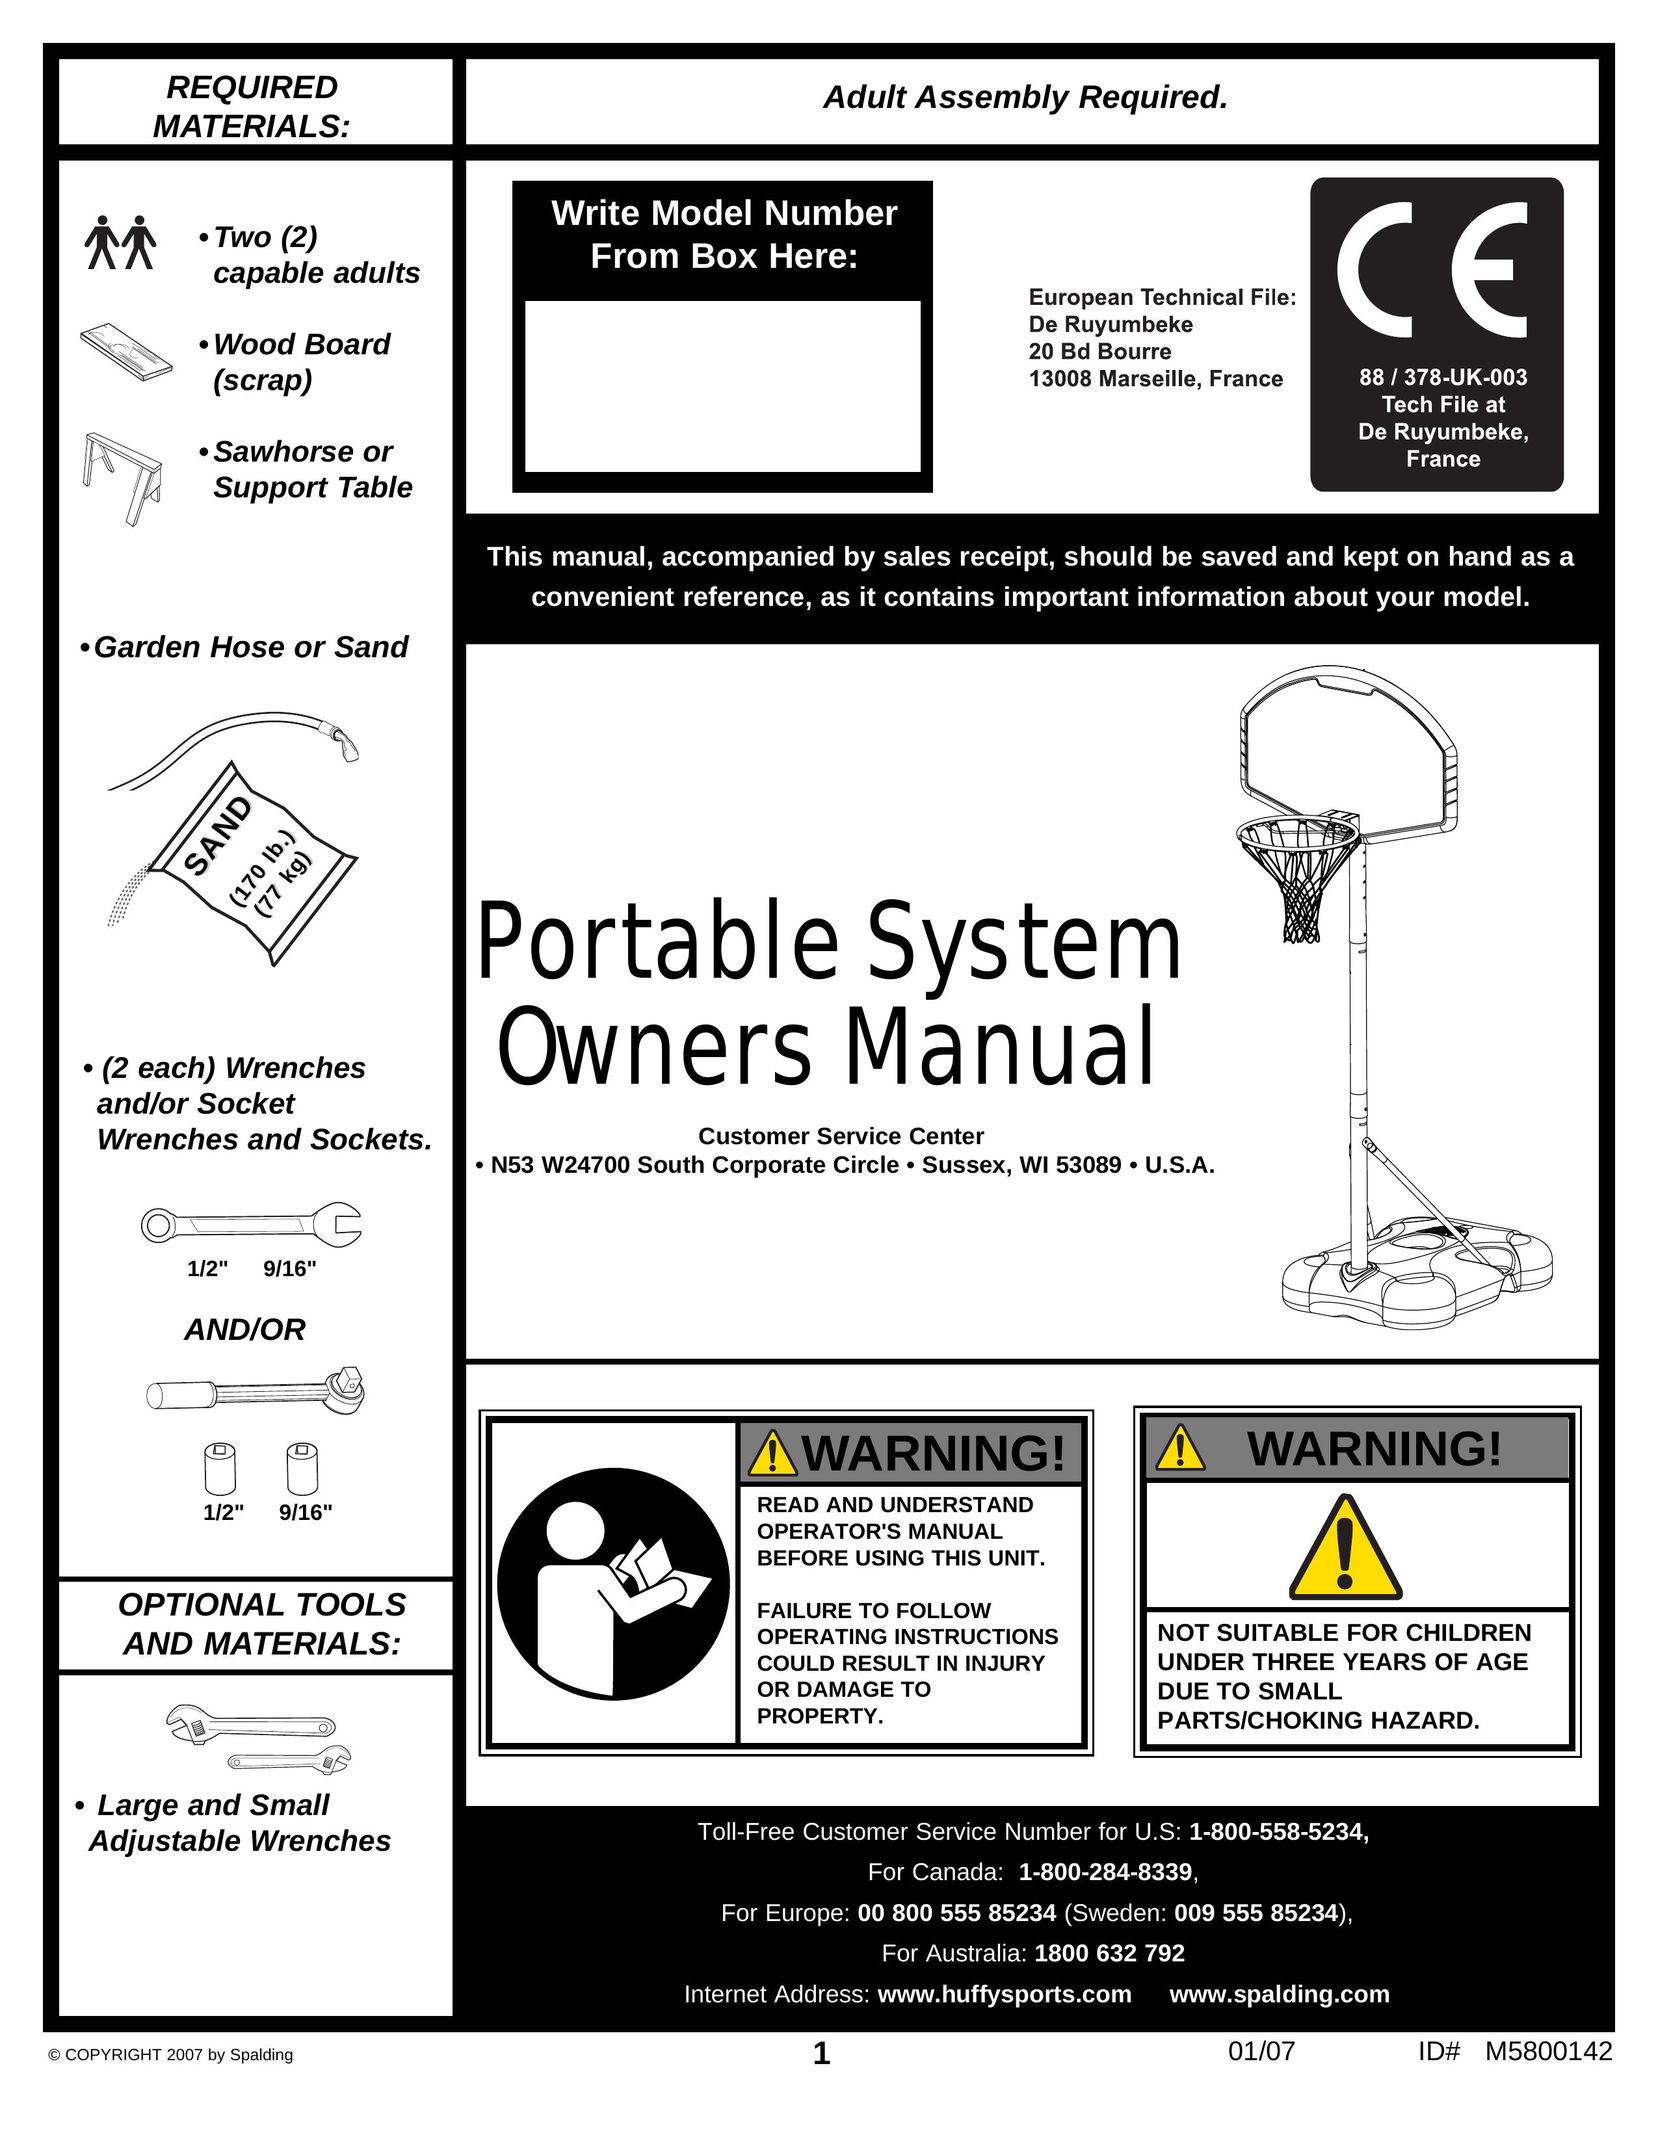 Spalding M5800142 Fitness Equipment User Manual